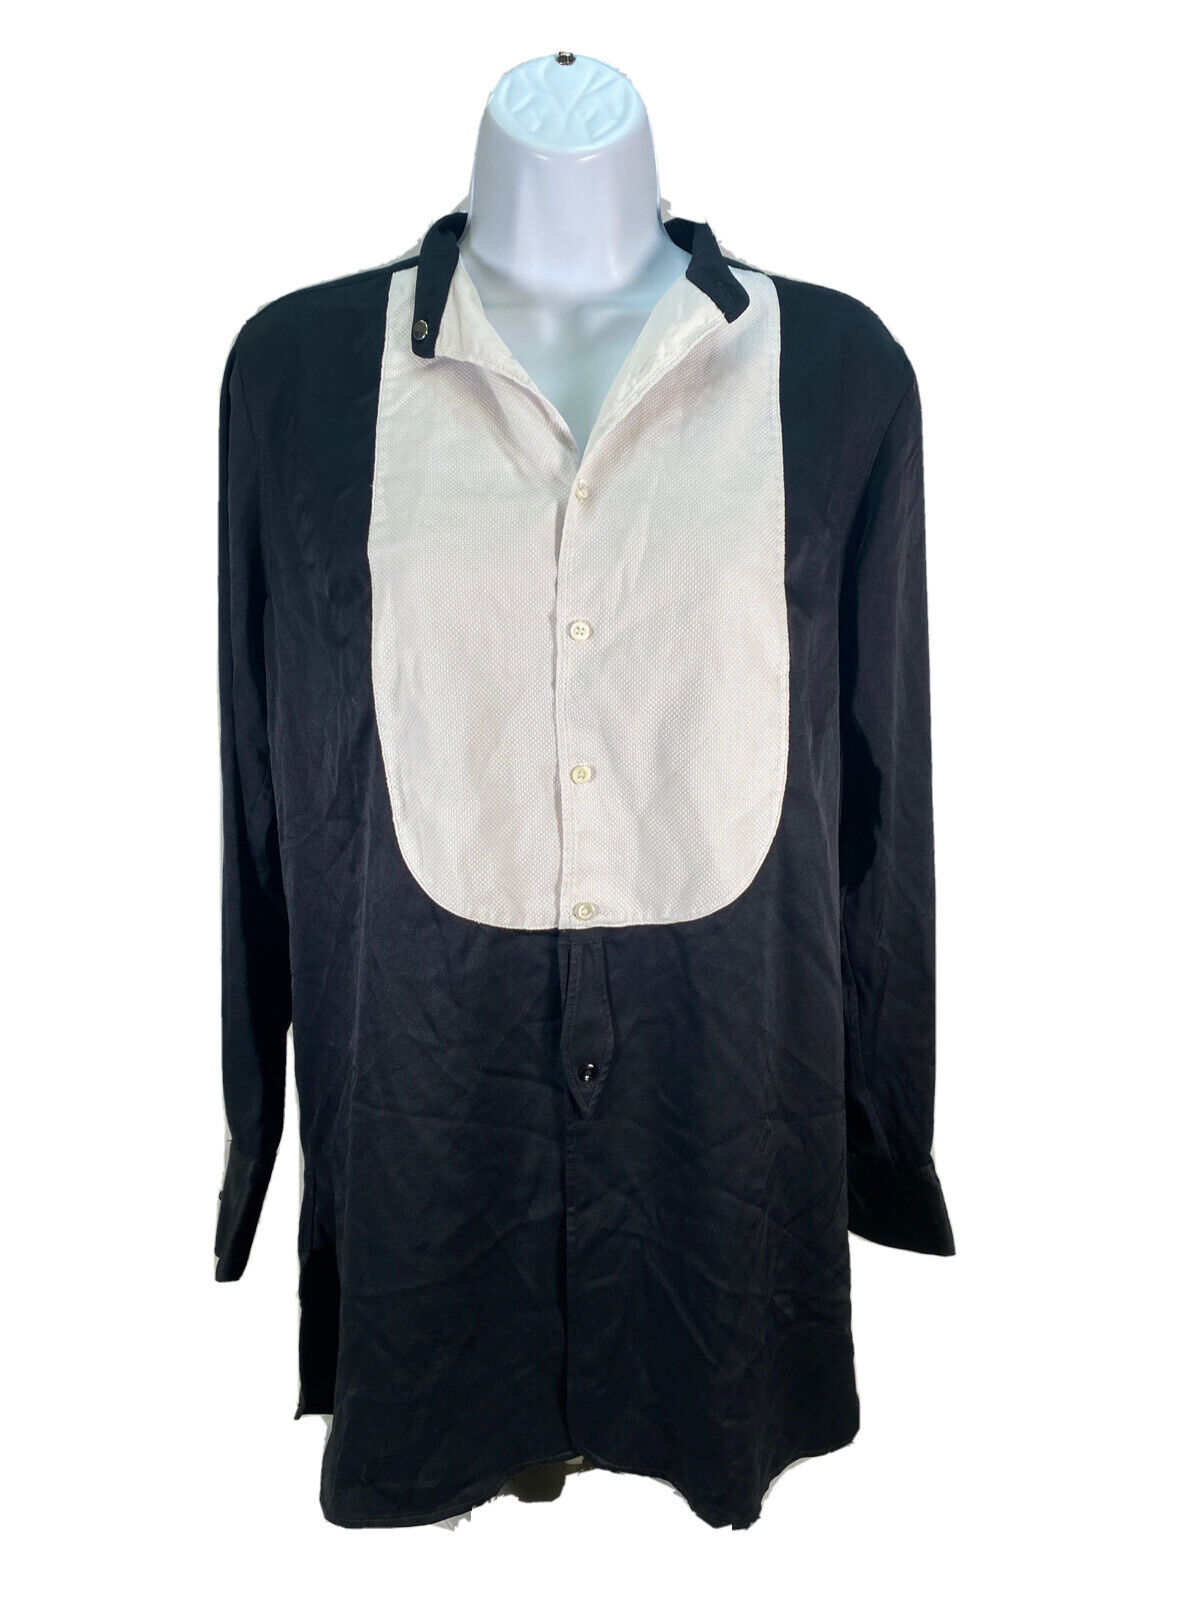 POLO Ralph Lauren Women's White/Black Long Sleeve Button Up Top Sz 2